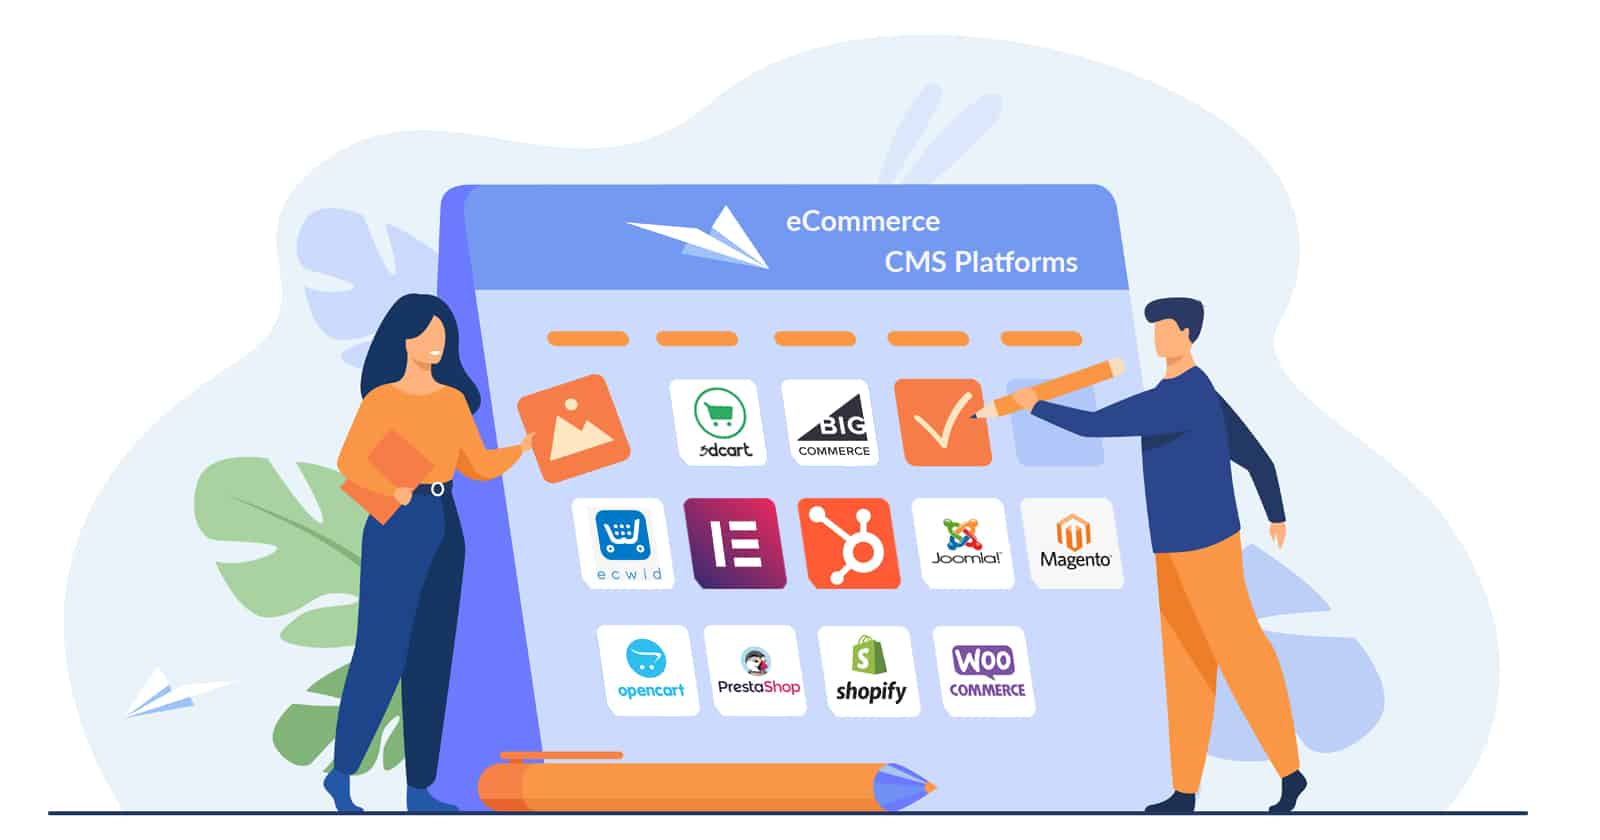 eCommerce CMS Platforms